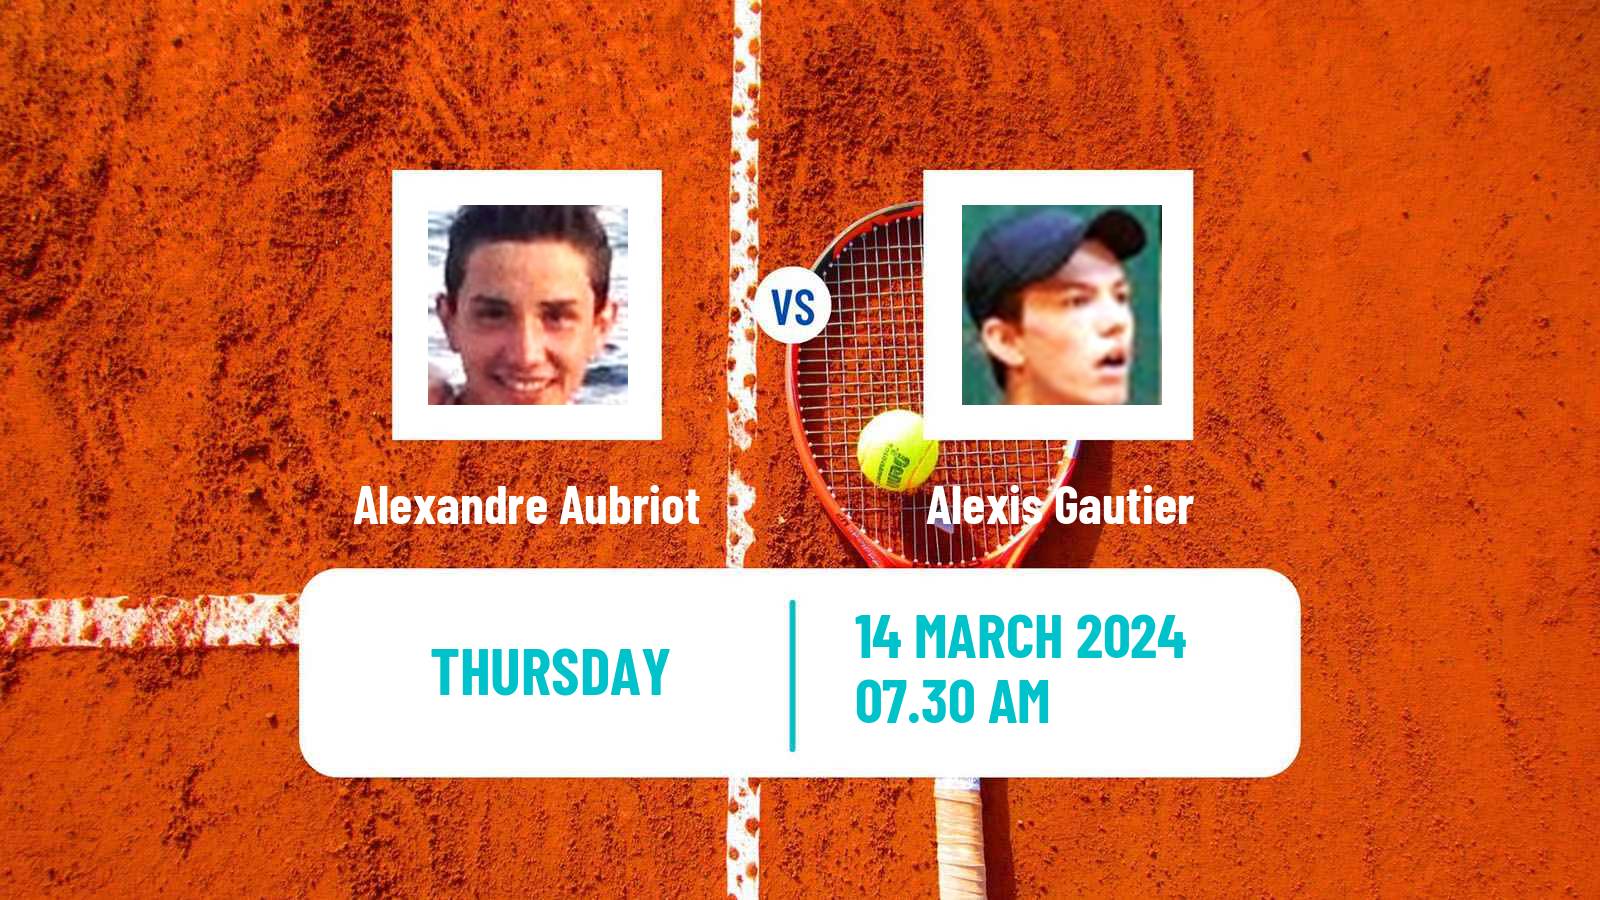 Tennis ITF M25 Creteil Men Alexandre Aubriot - Alexis Gautier